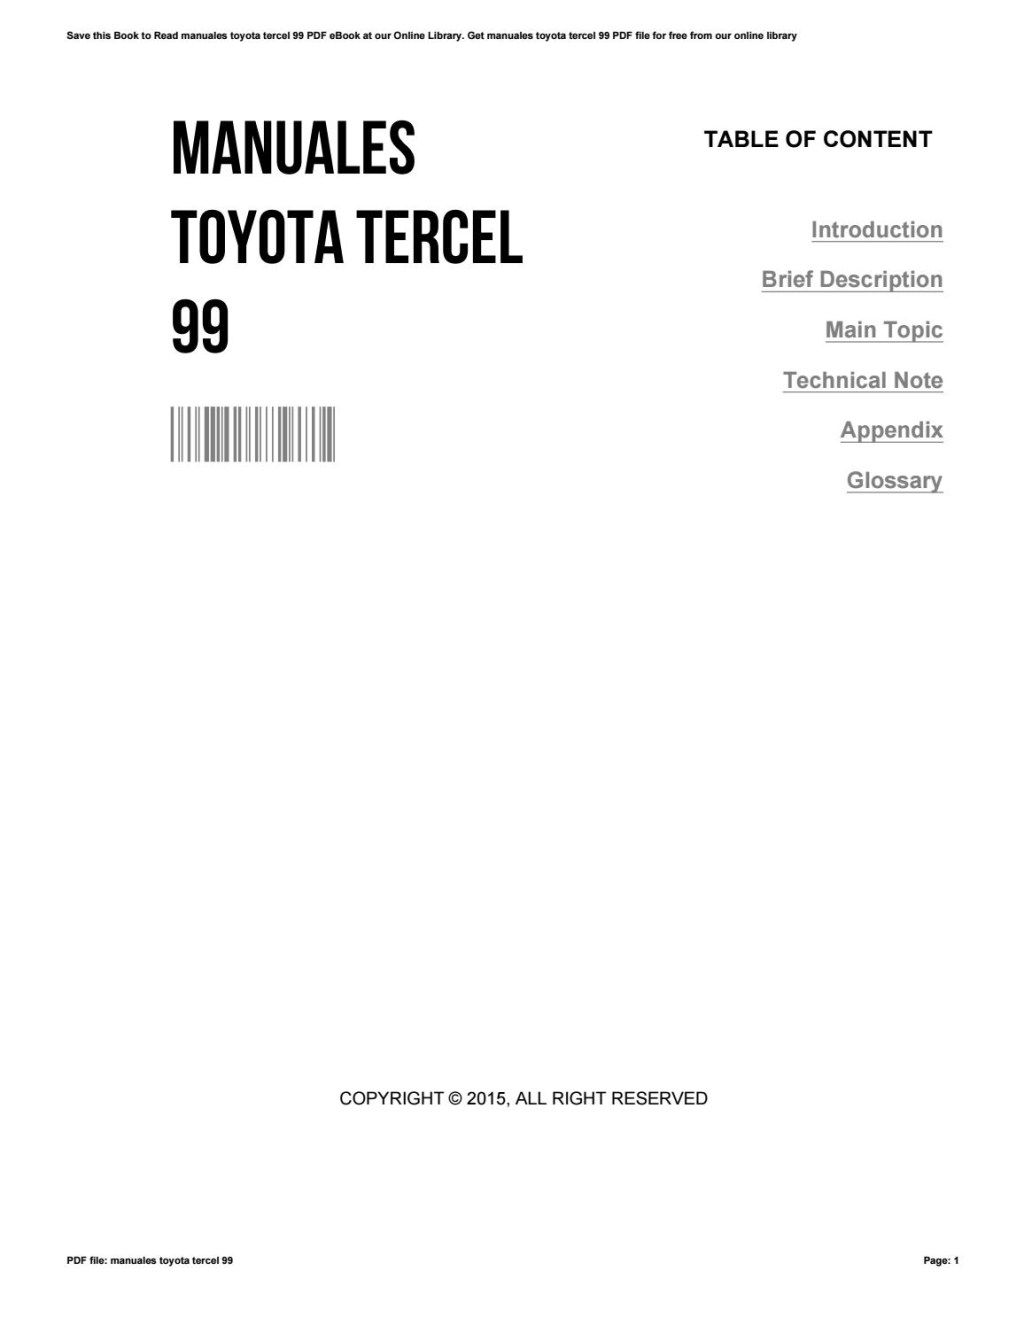 Picture of: Manuales toyota tercel  by DeborahBurt – Issuu